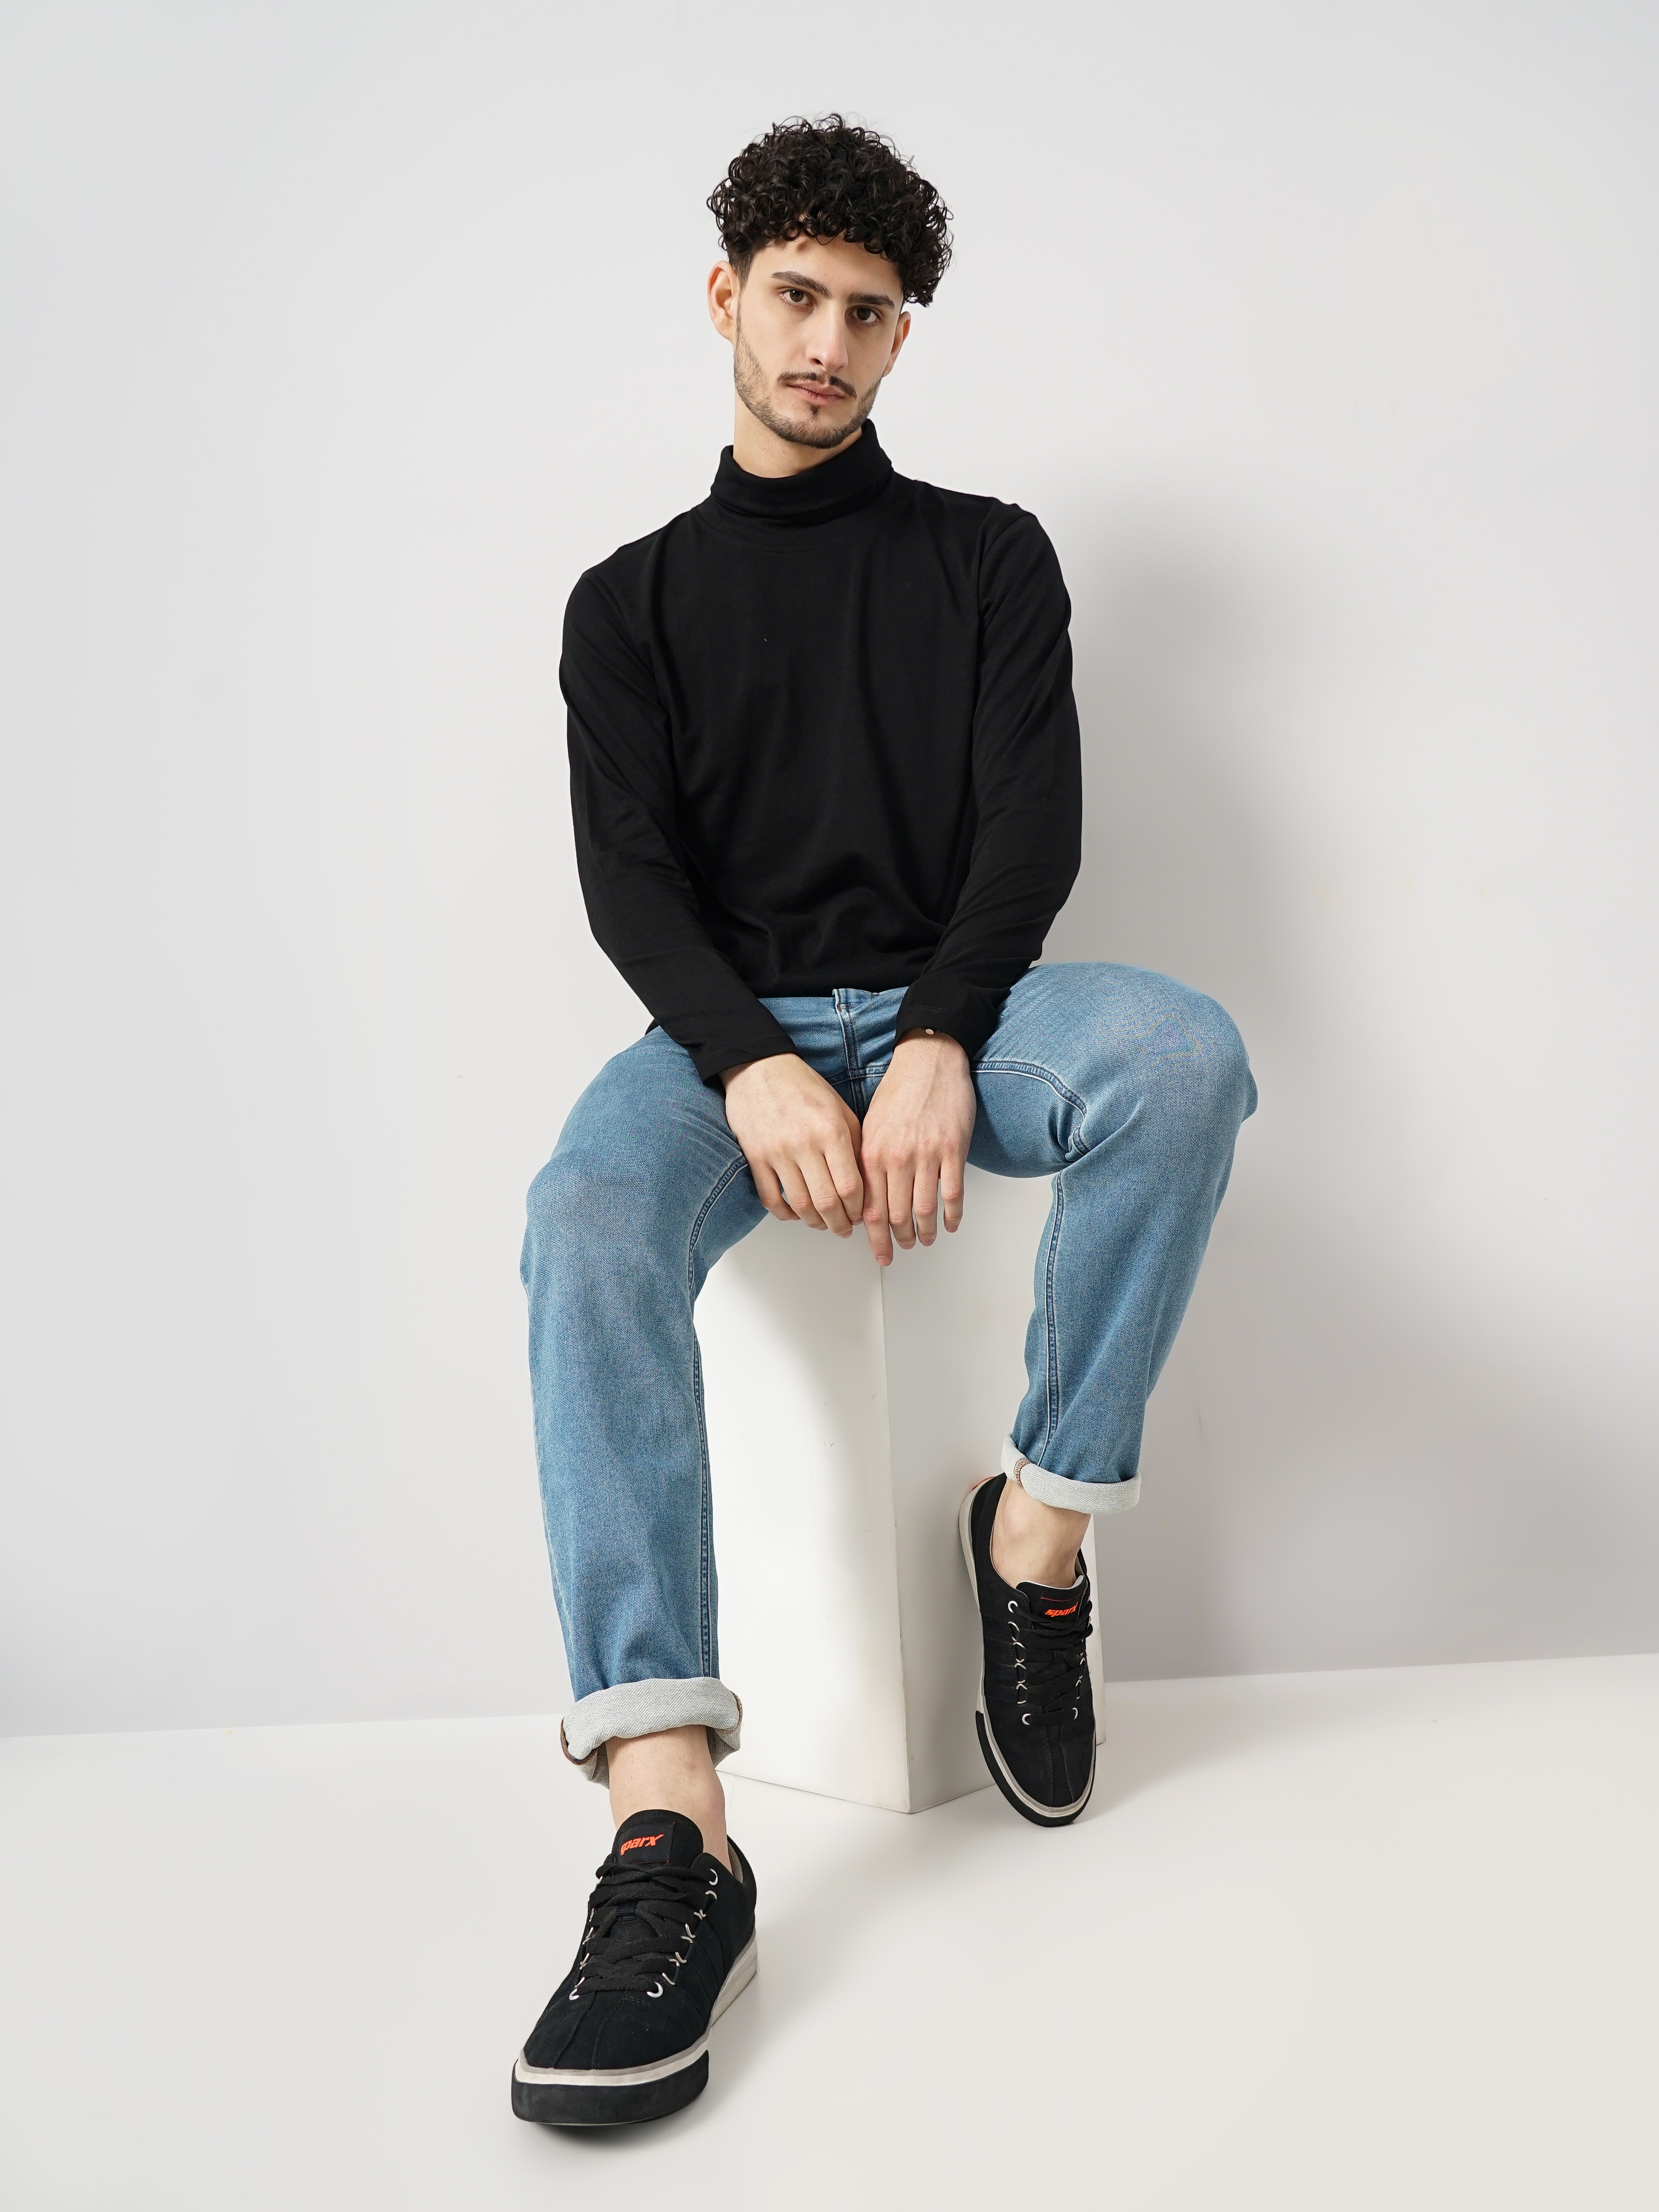 Celio Men's Solid Black Full Sleeve Turtle Neck Fashion Tshirt